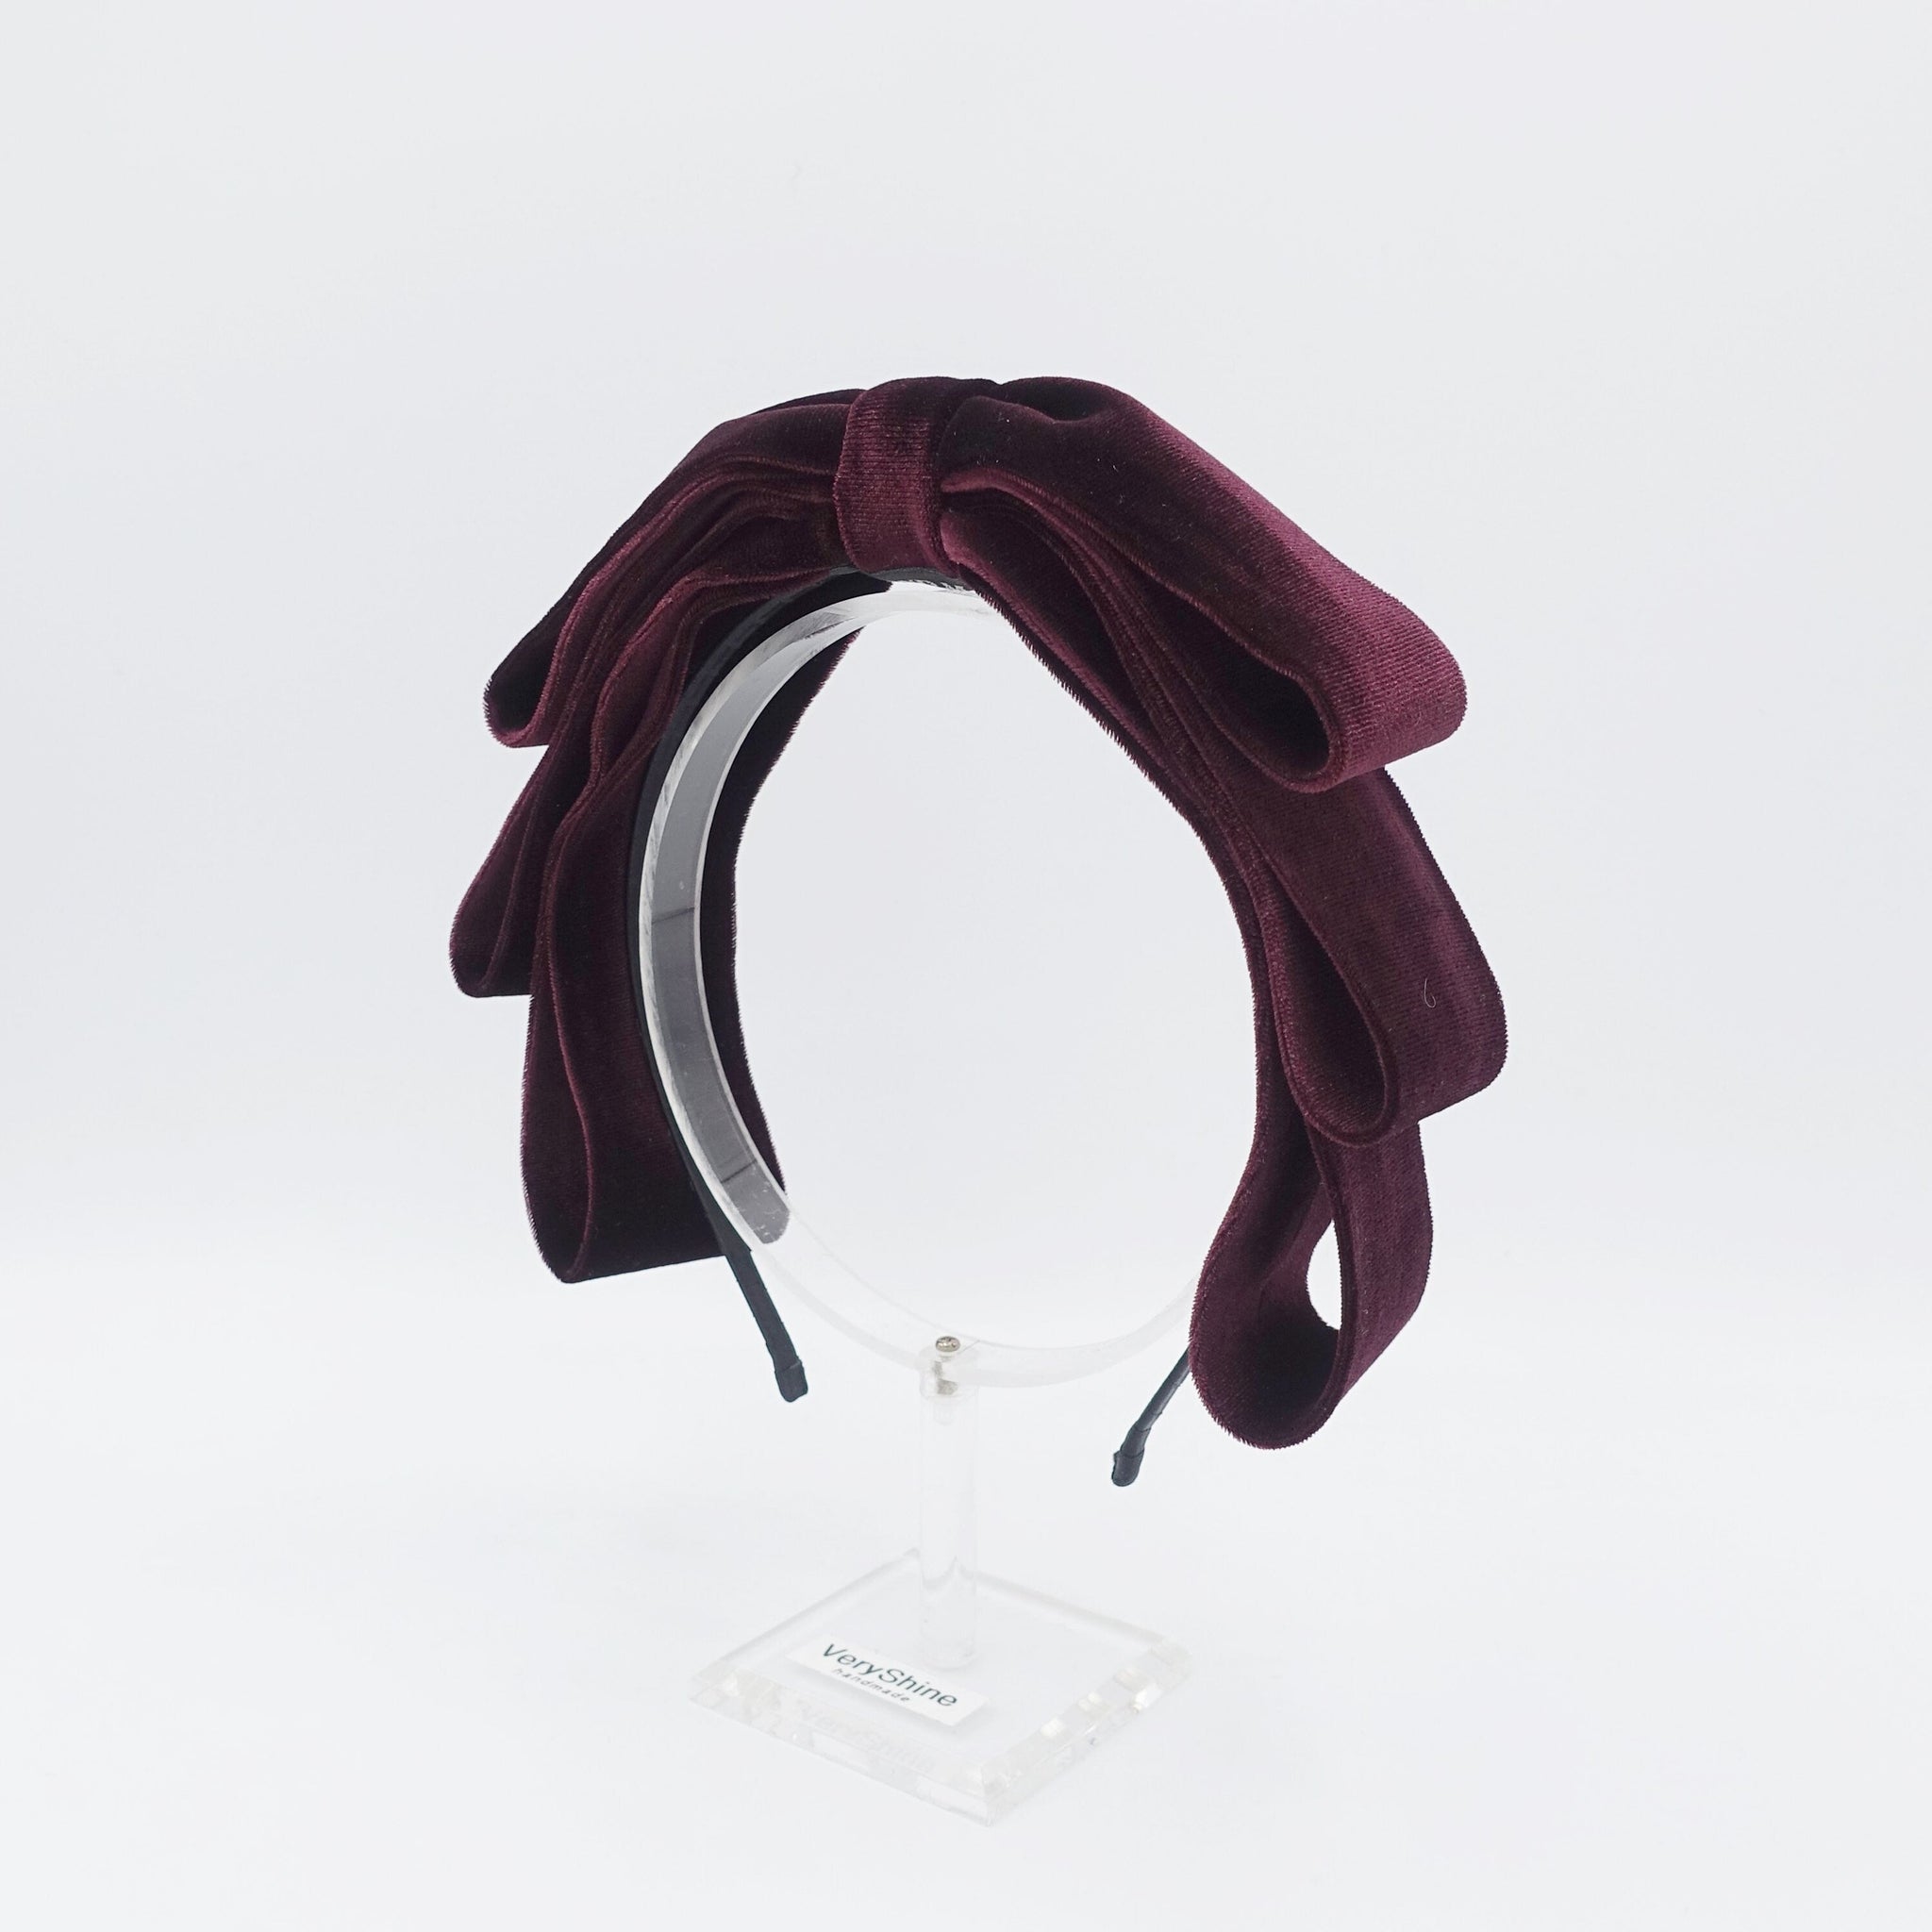 veryshine.com Headband Triple red wine velvet loop bow headband thin hairband women hair accessory